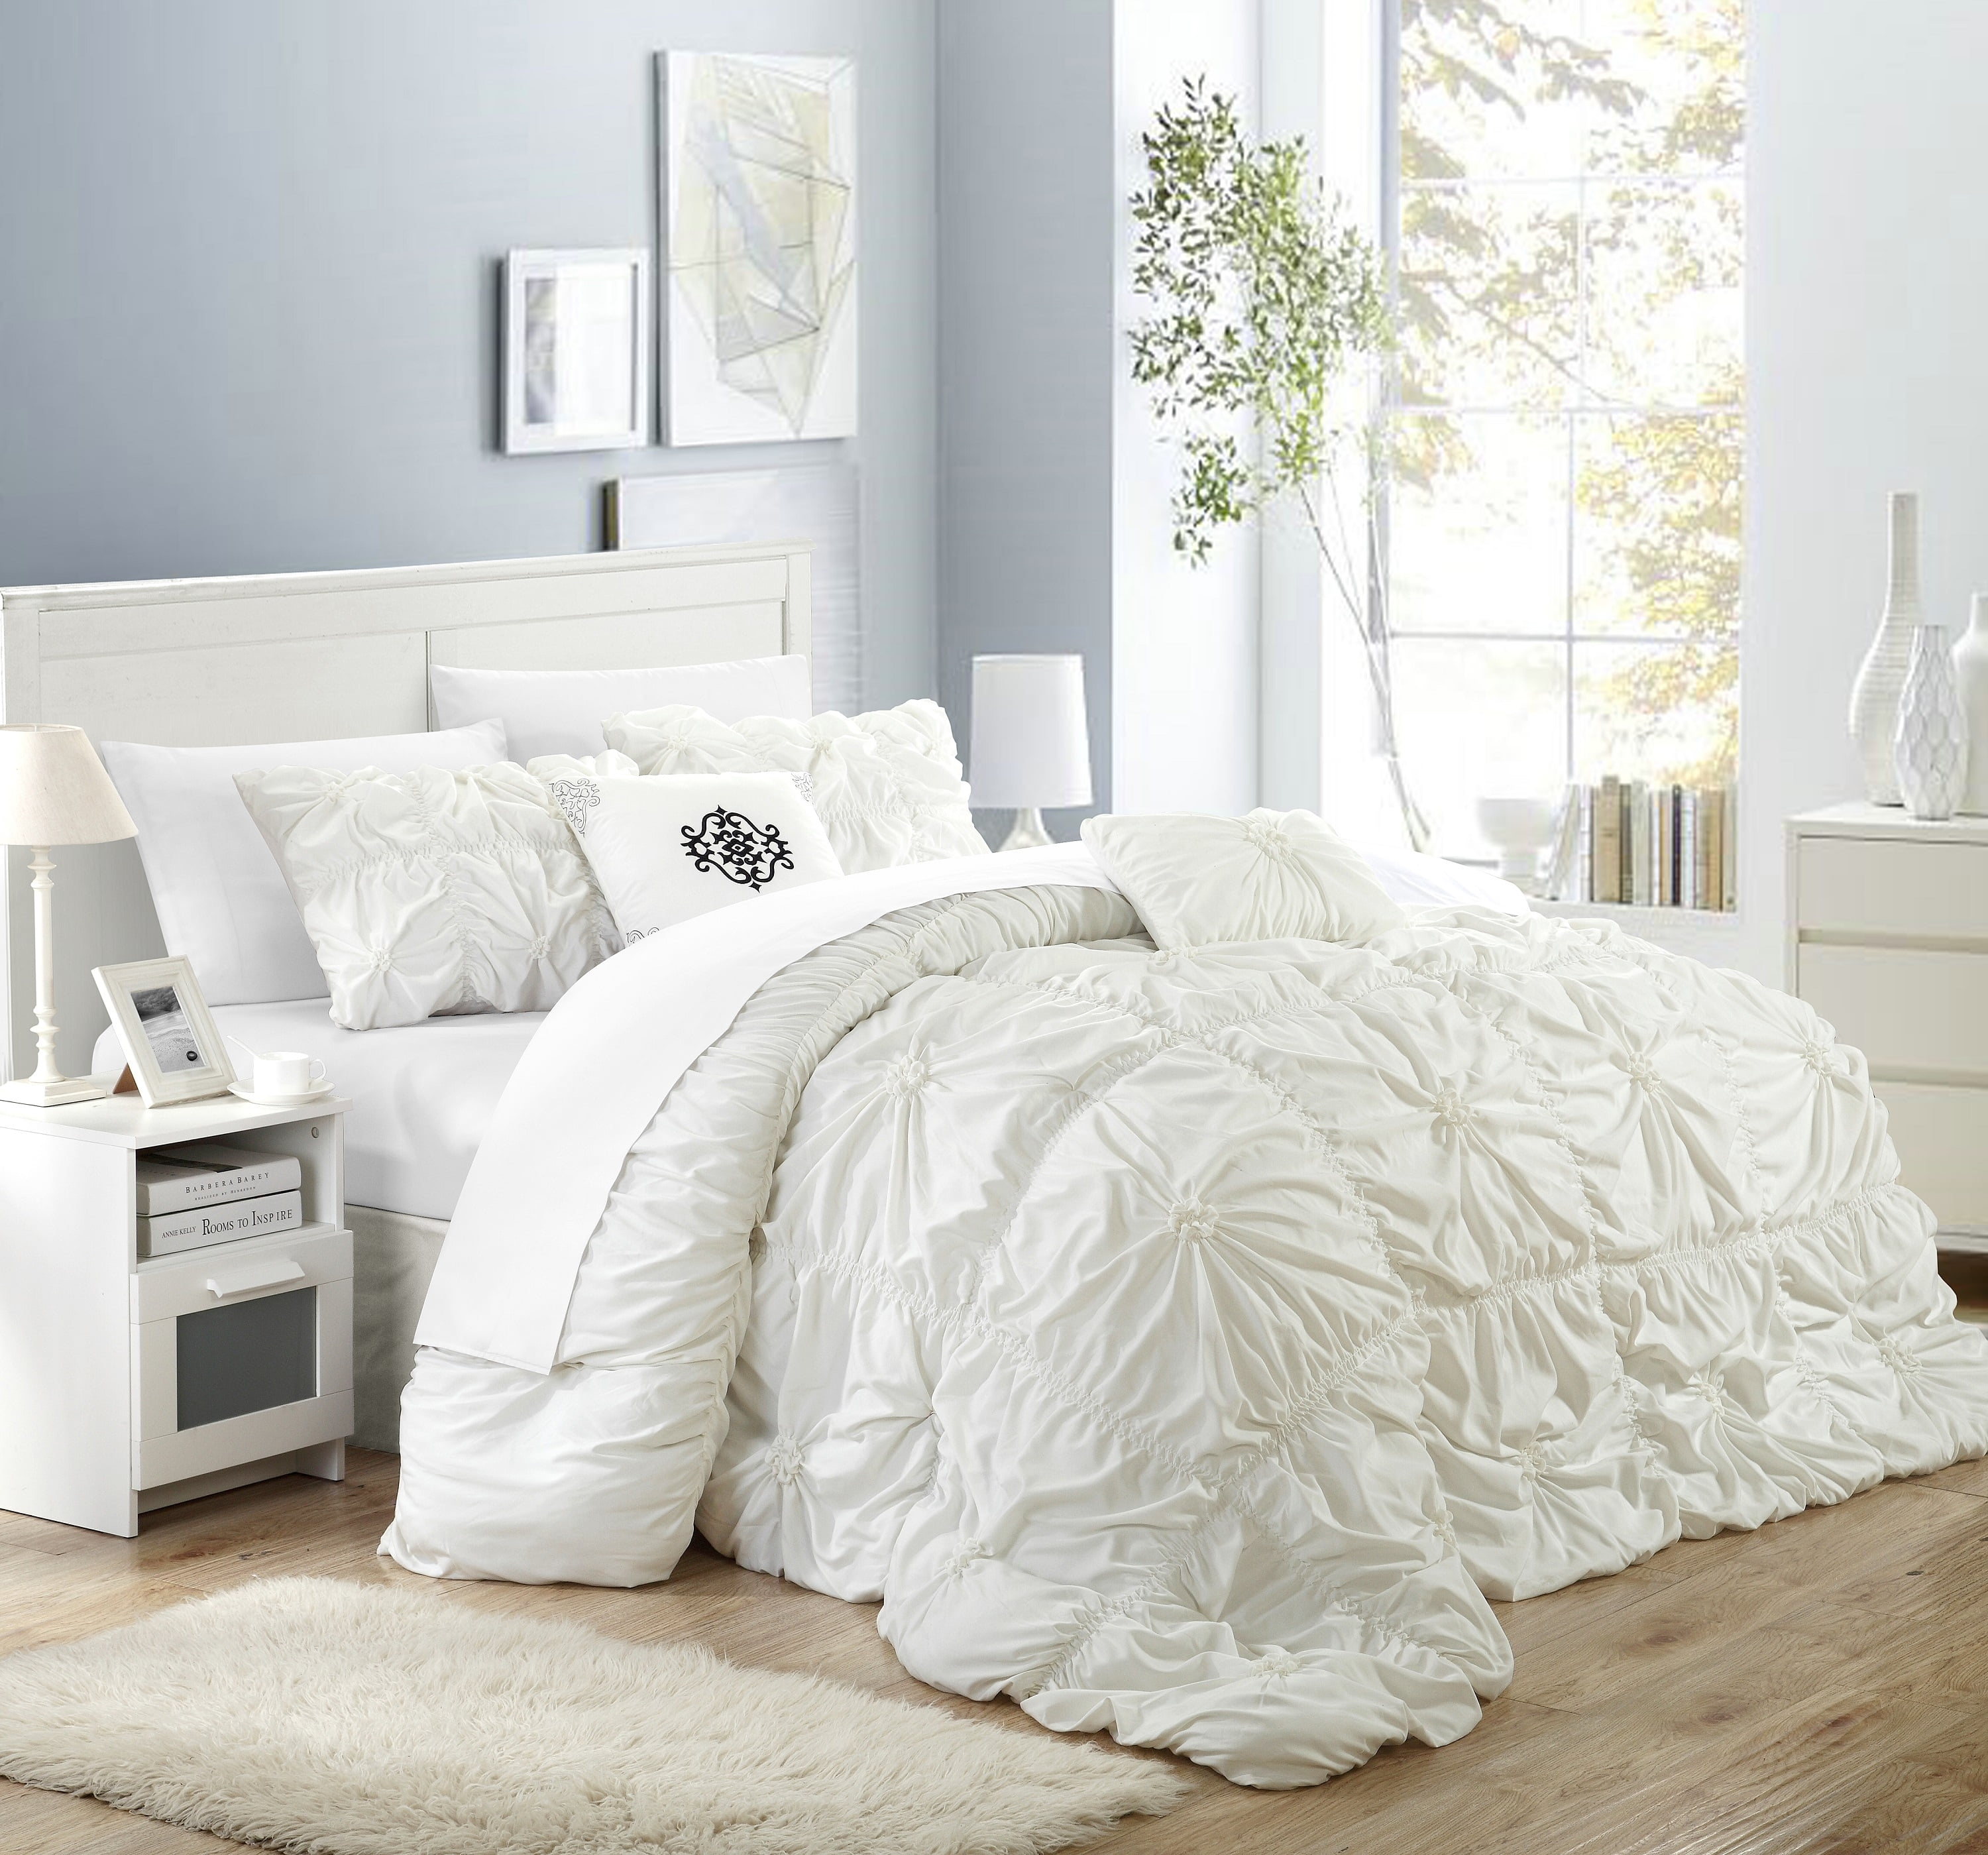 Full Queen King 5 PC Grey White & Black Comforter Set w/ Burnout Lace Design 